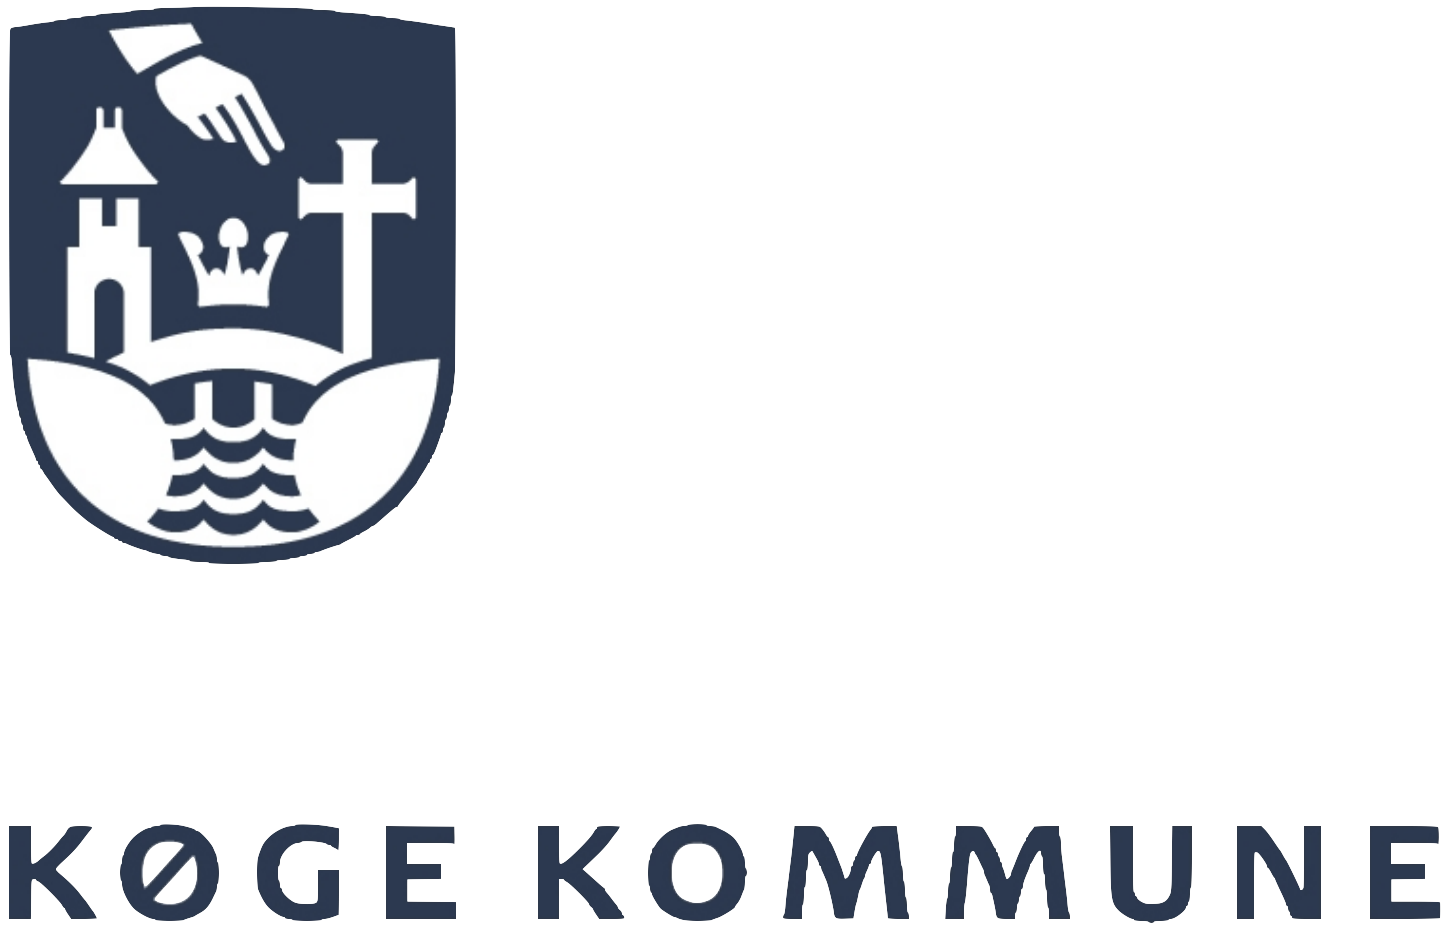 Køge Kommune logo